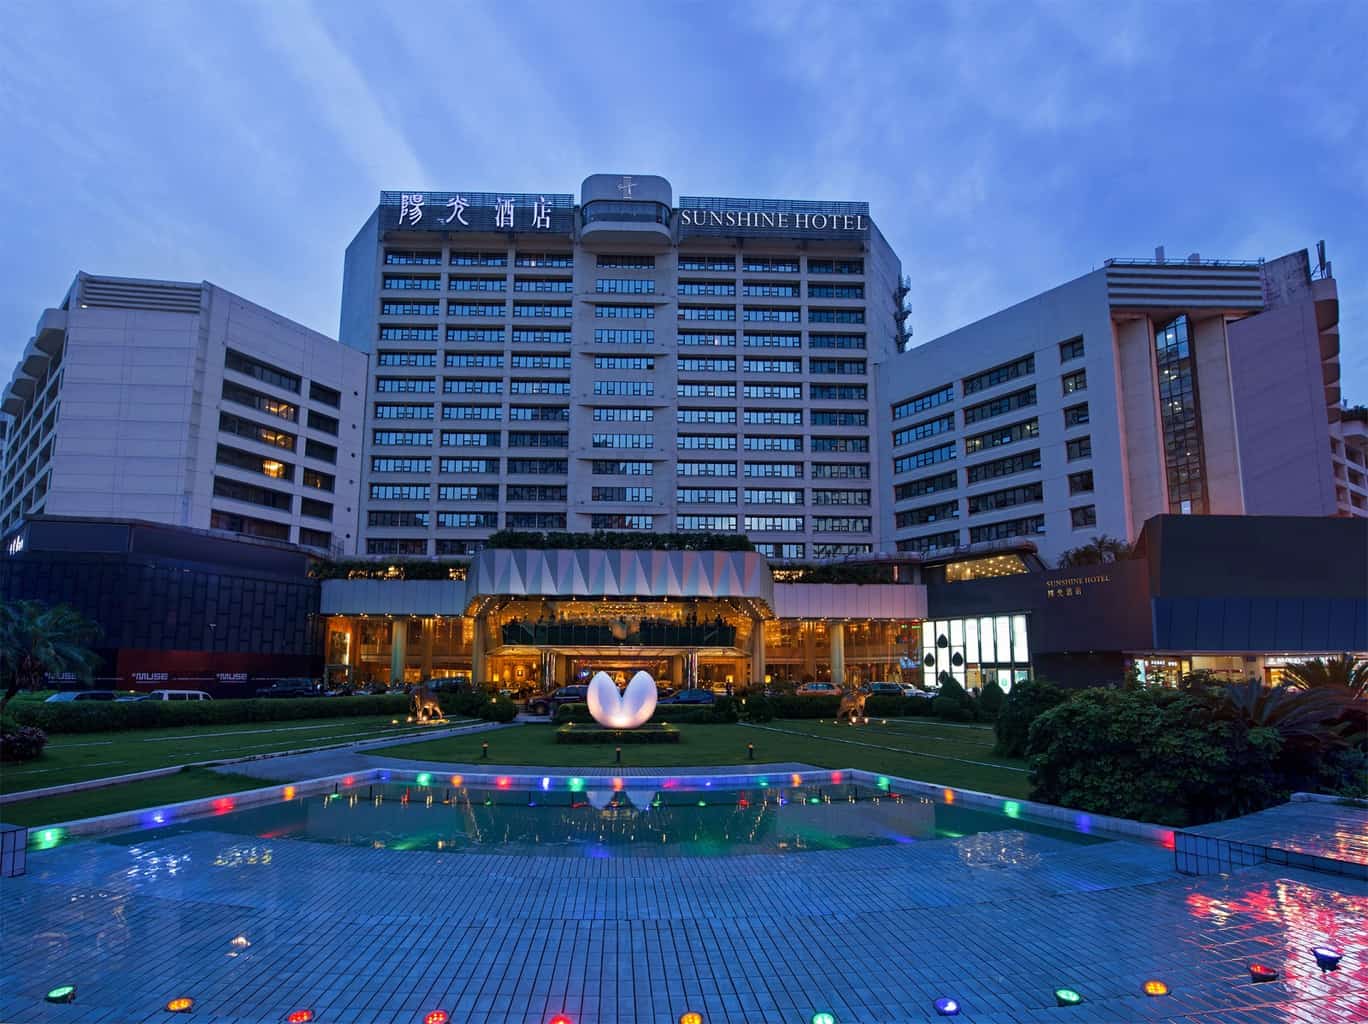 Featured image for “Sunshine Hotel Shenzhen”